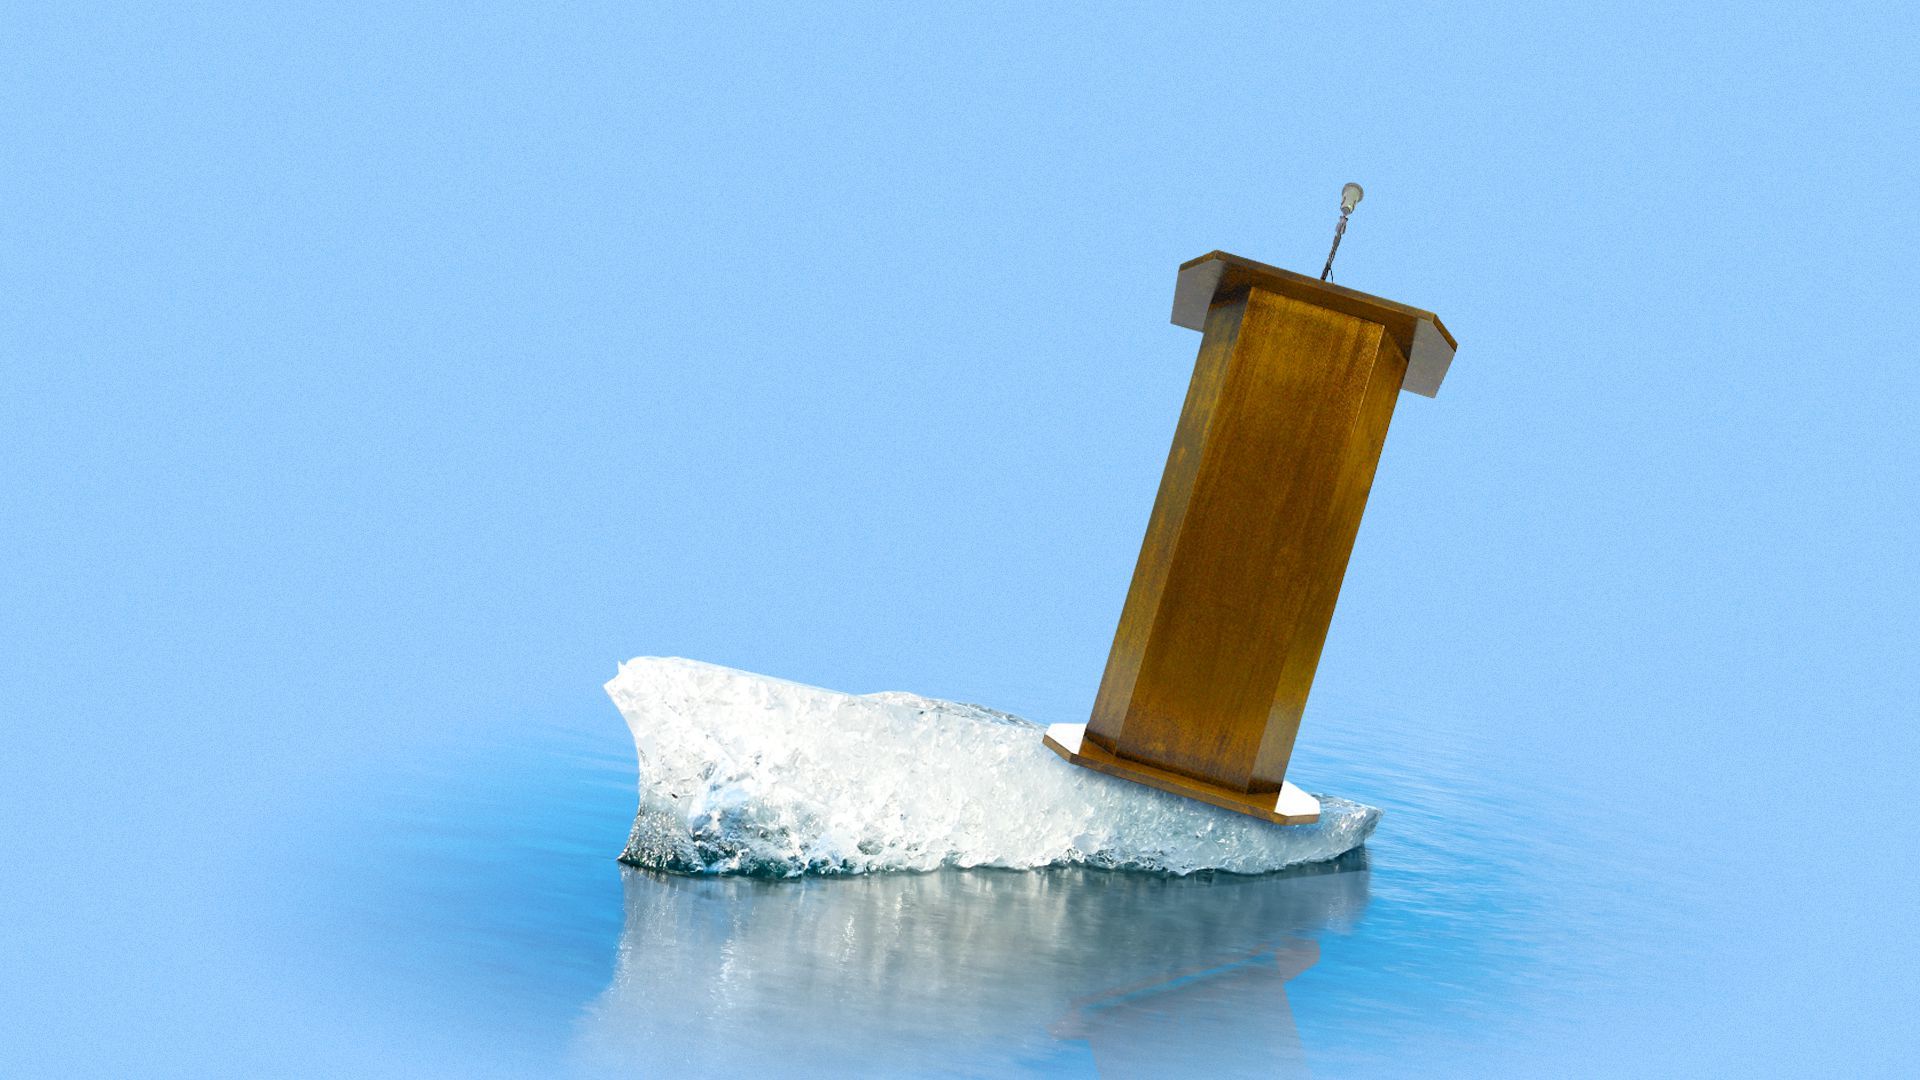 Illustration of a debate podium sliding off of a melting iceberg